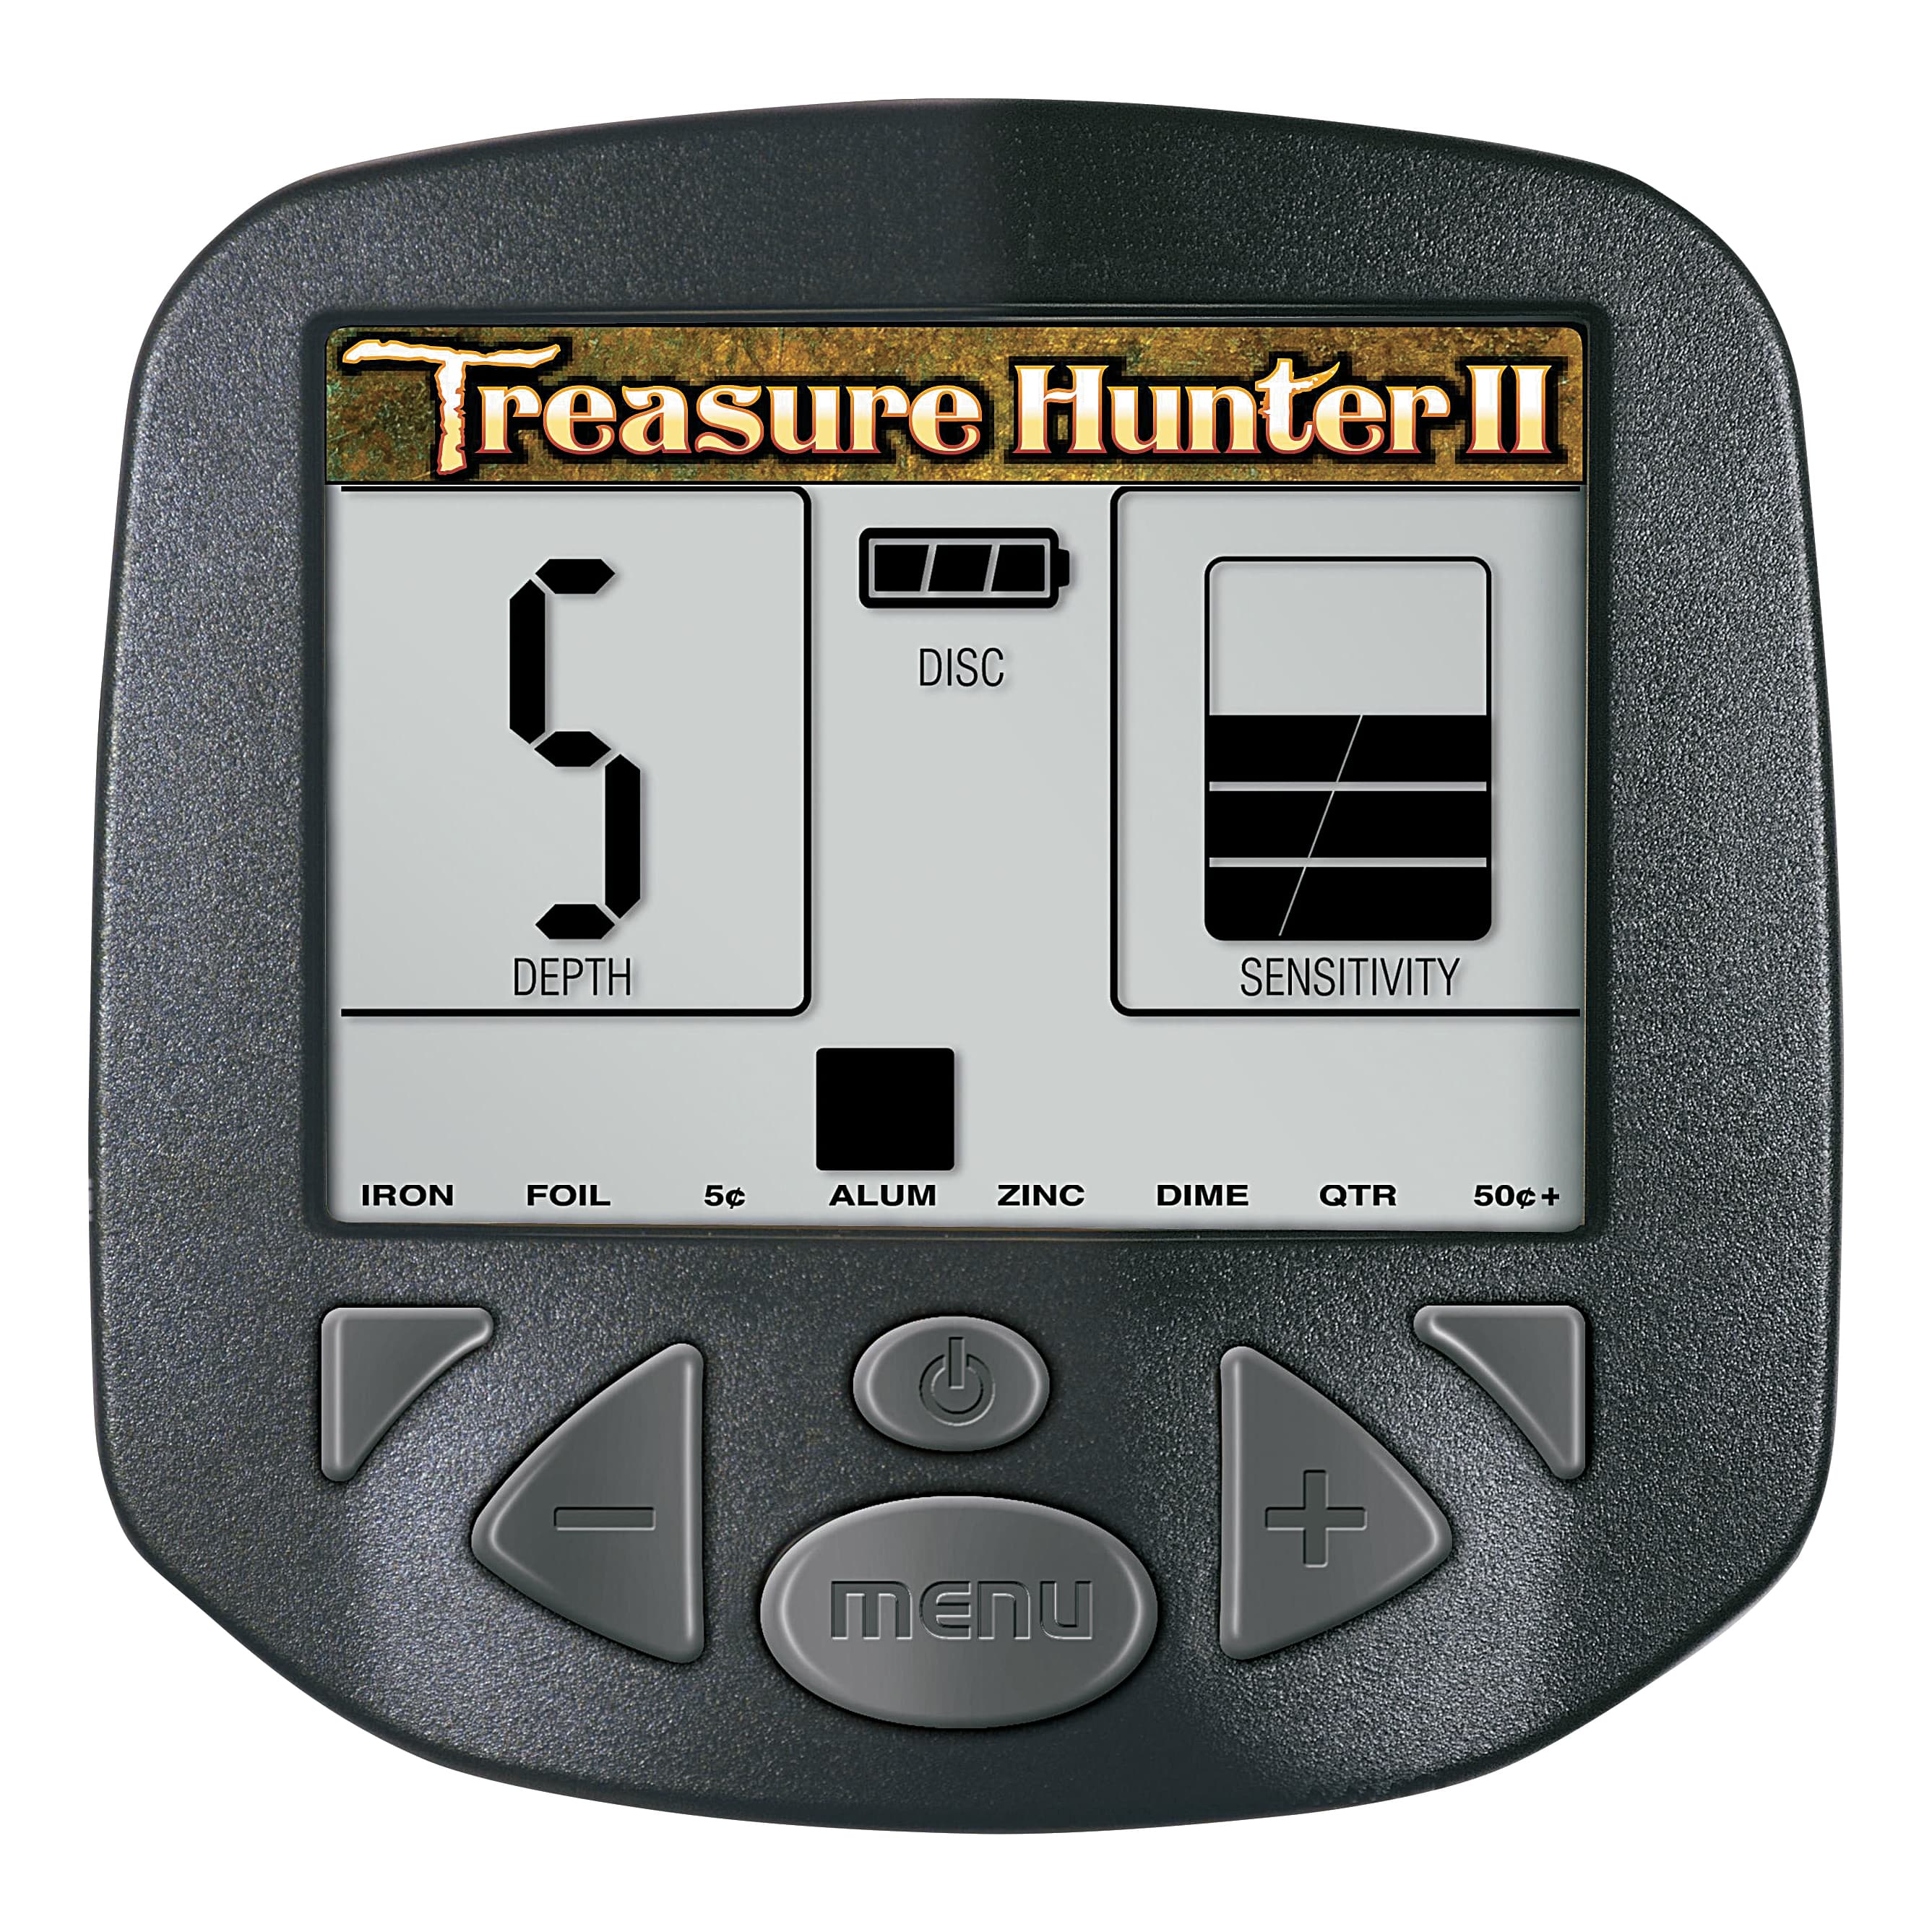 Cabela's Treasure Hunter II Metal Detector by Bounty Hunter - Faceplate